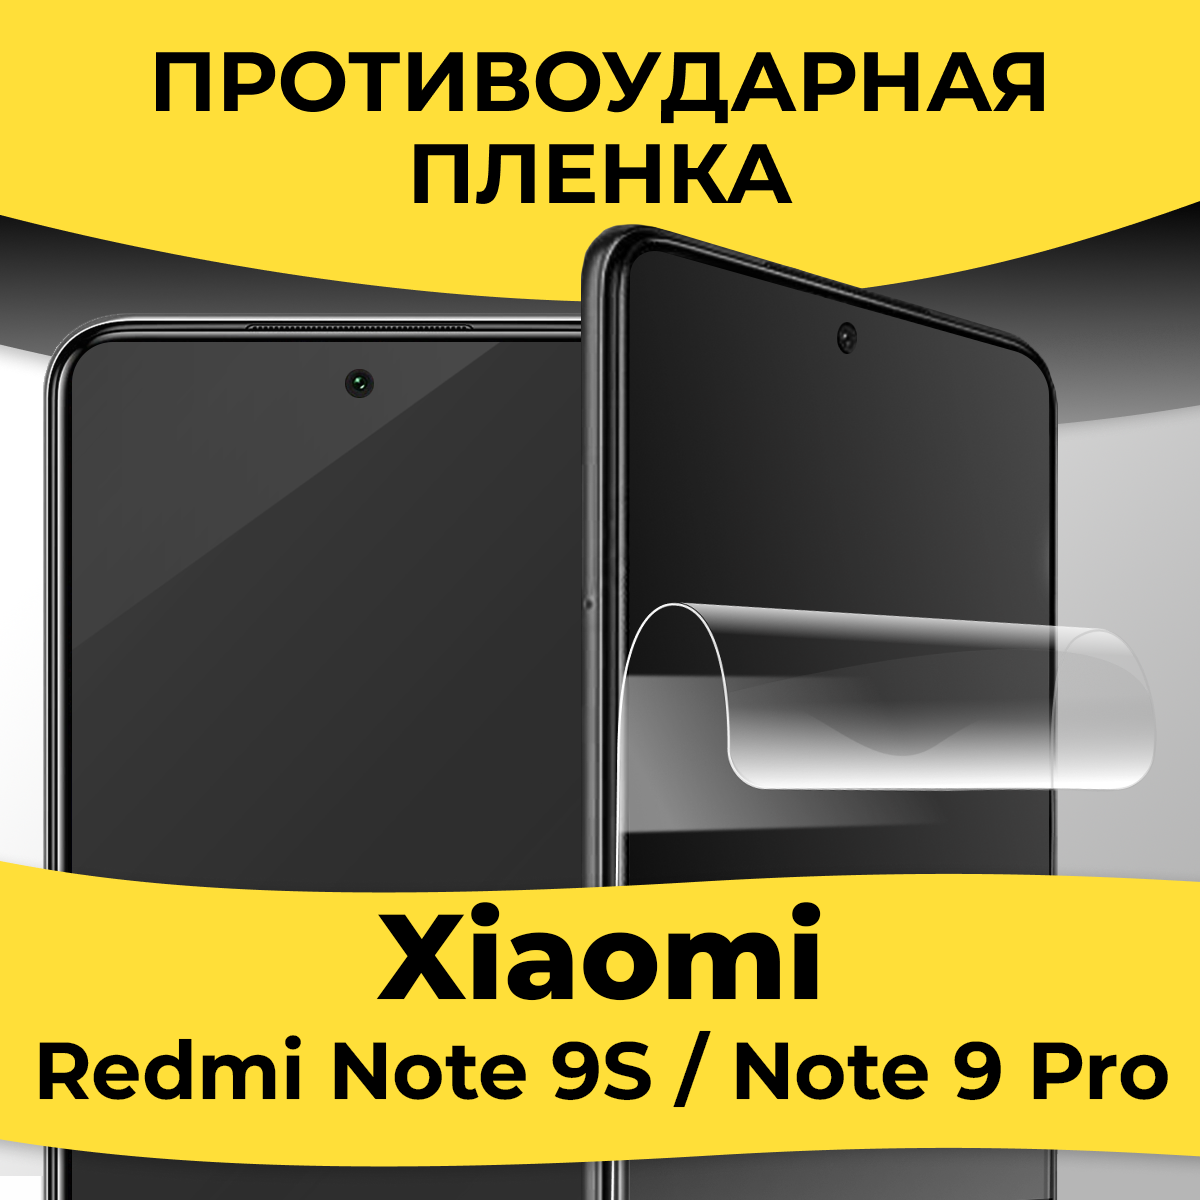 Гидрогелевая пленка для смартфона Xiaomi Redmi Note 9S / Redmi Note 9 Pro / Защитная пленка на телефон Сяоми Редми Нот 9С / Редми Нот 9 Про